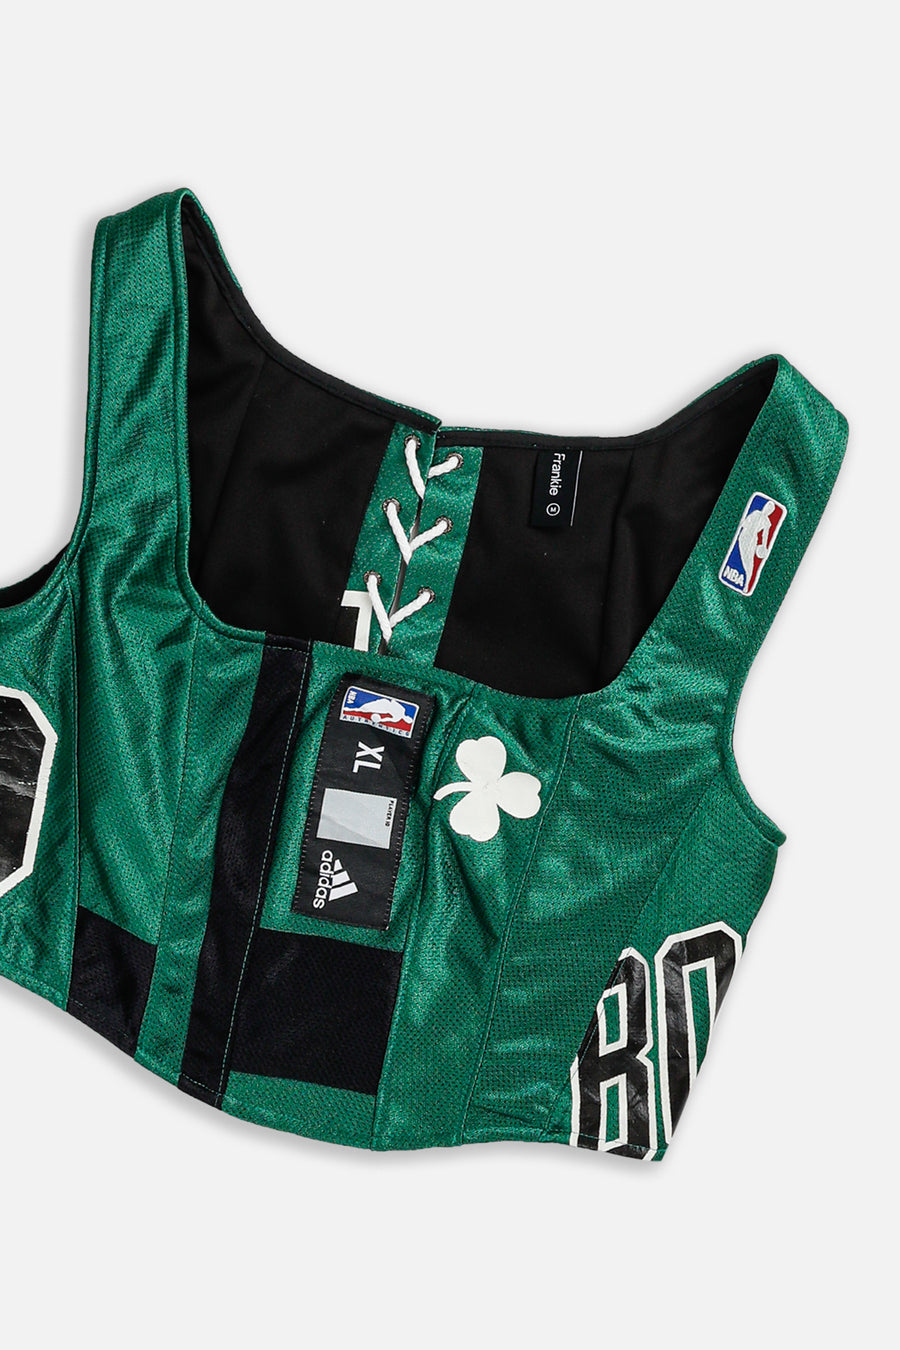 Rework Boston Celtics NBA Corset - M